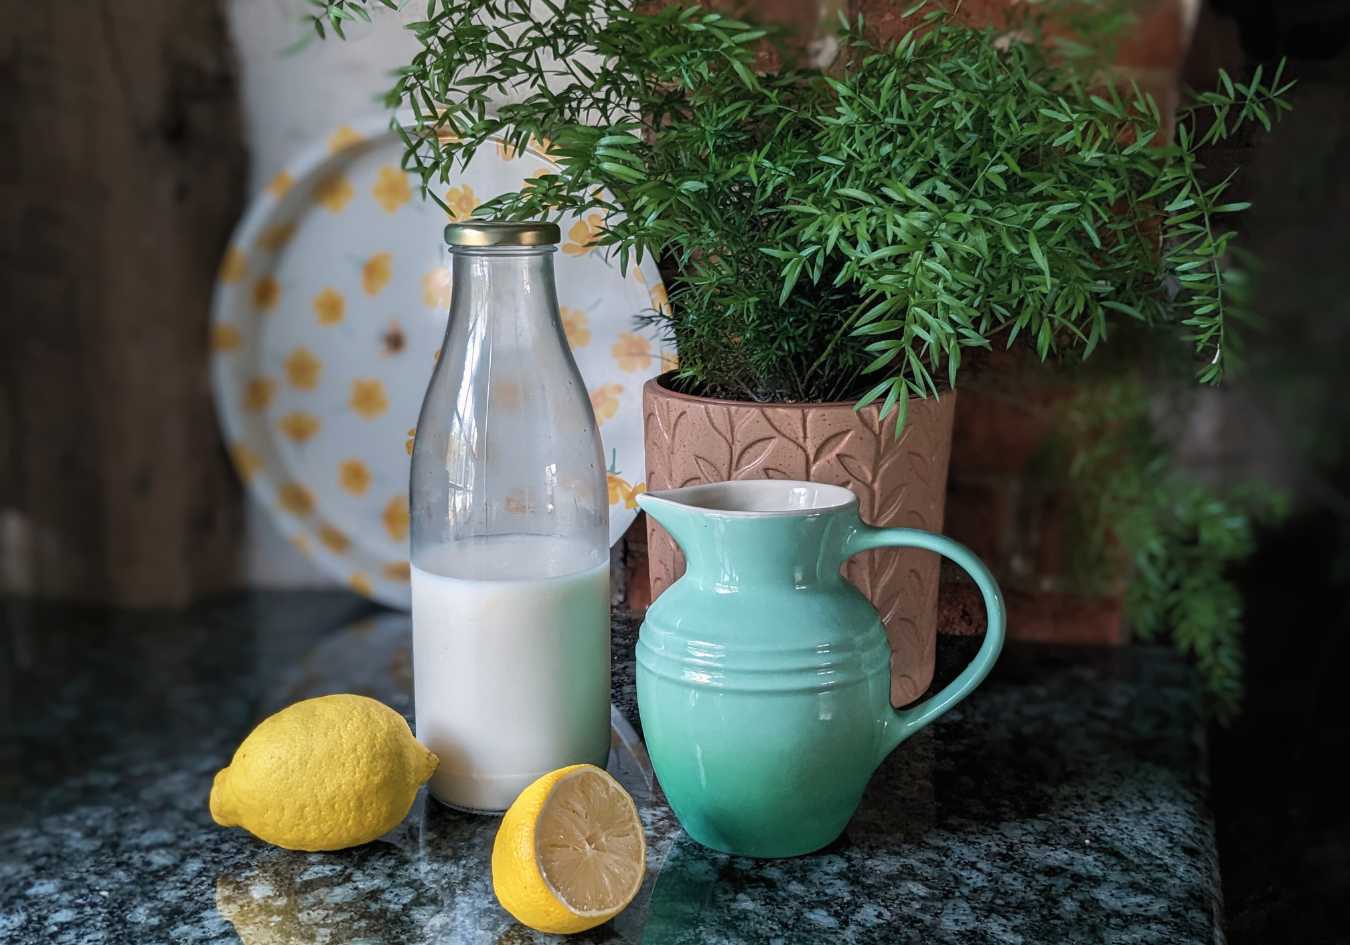 A jug of vegan buttermilk next to some lemon and vegan milk